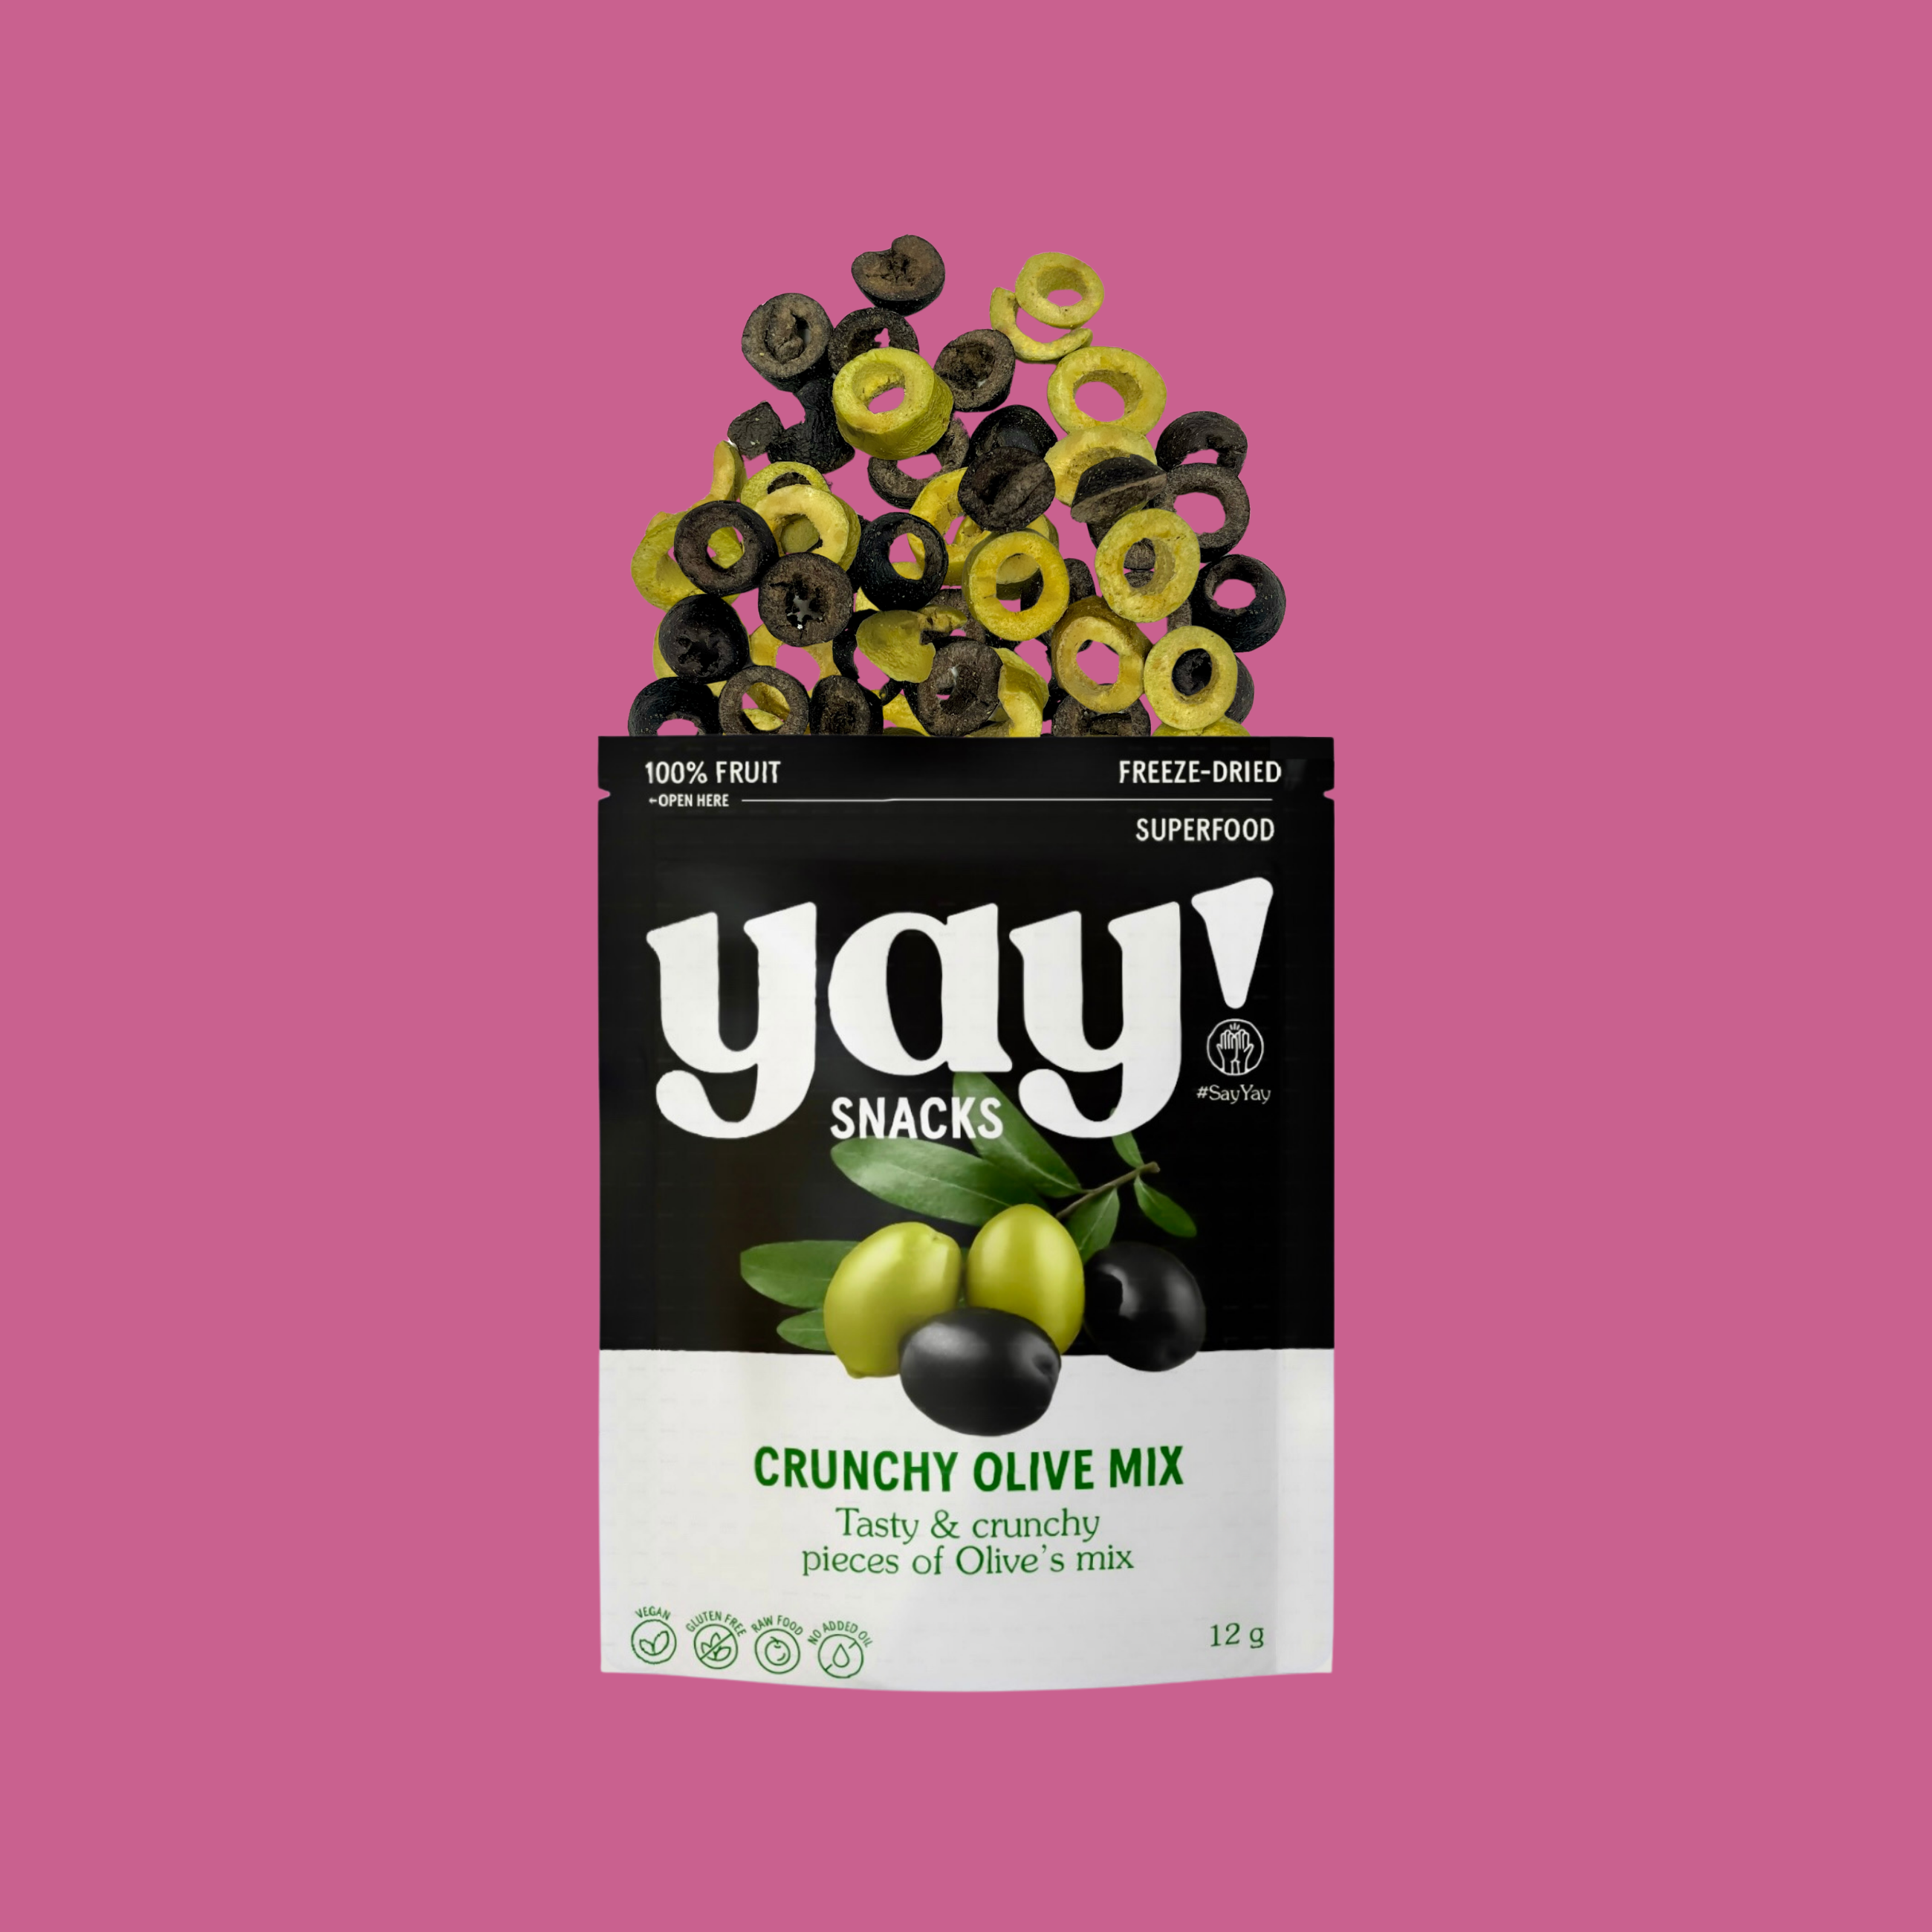 Crunchy Olive Mix